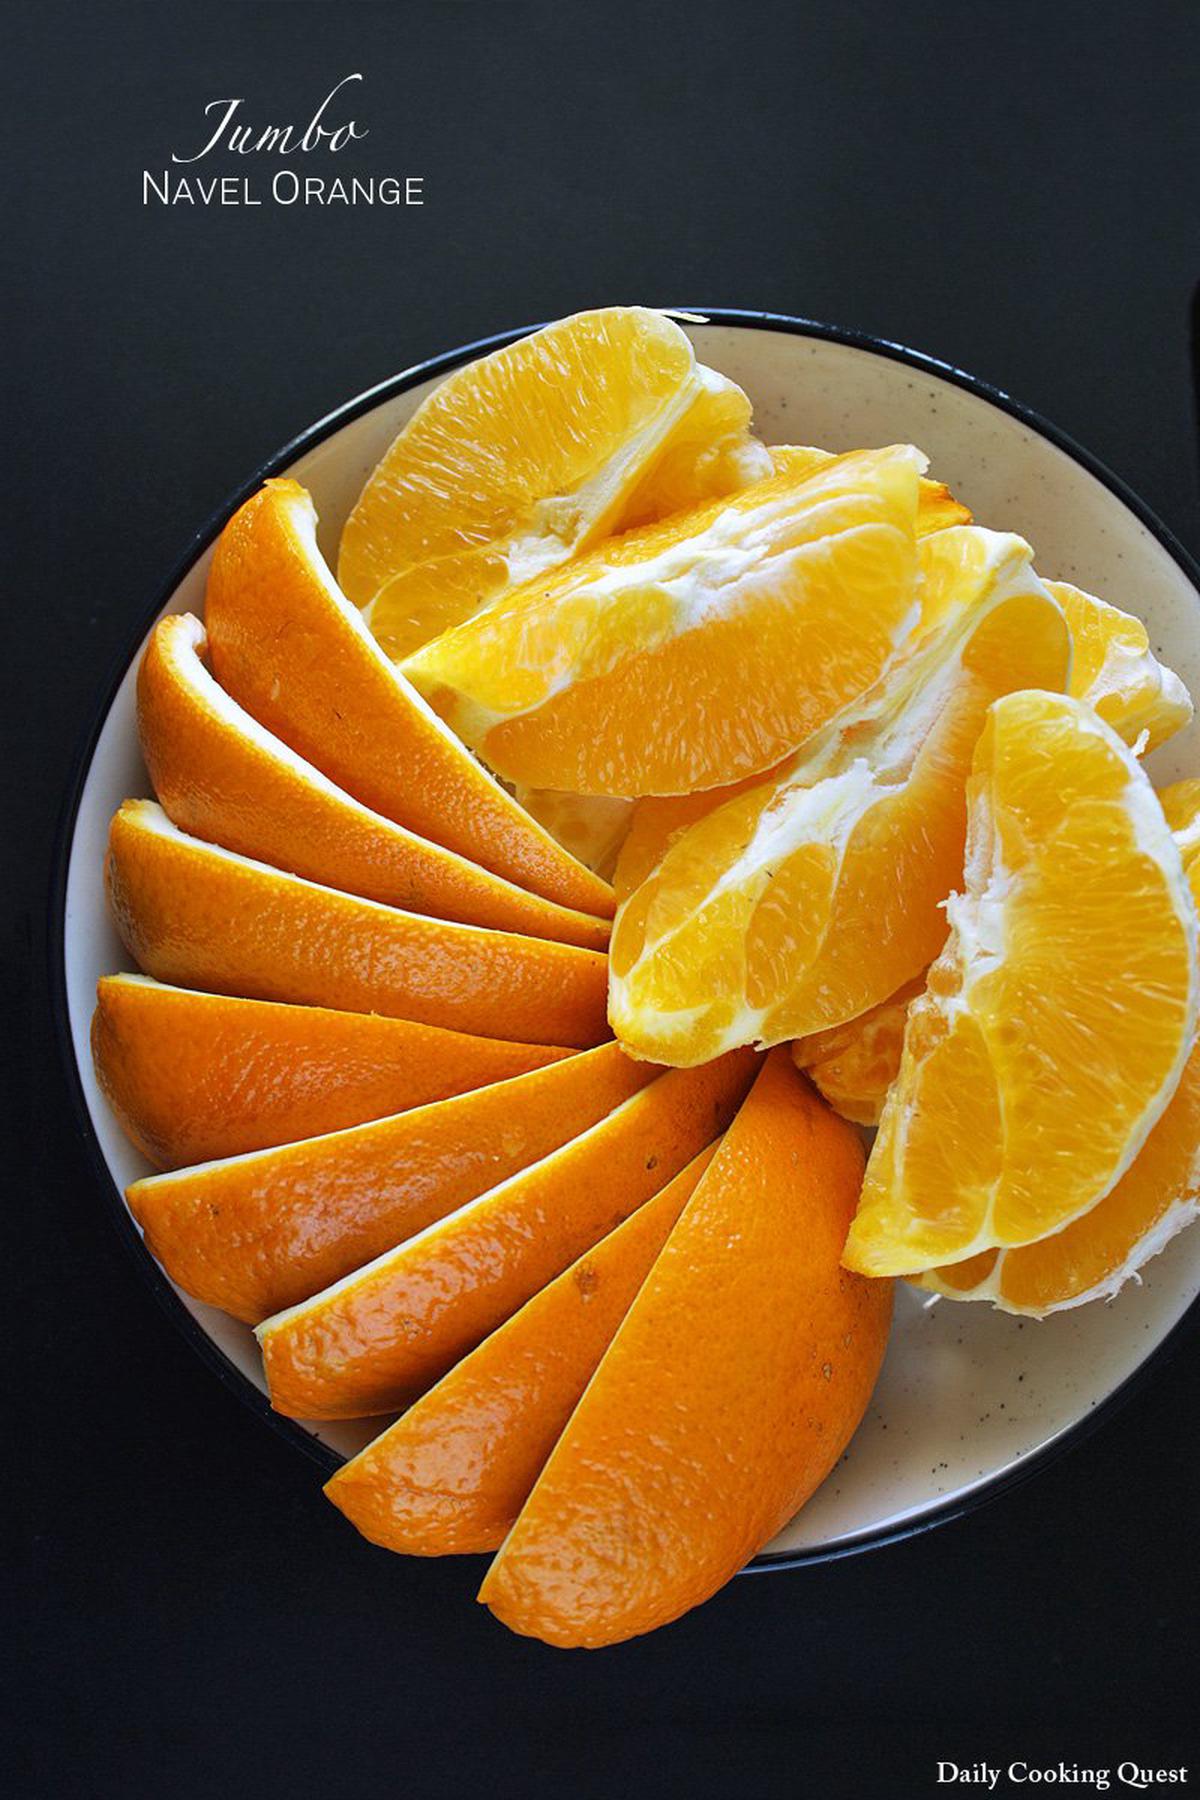 Jumbo Navel Orange Peels and Flesh